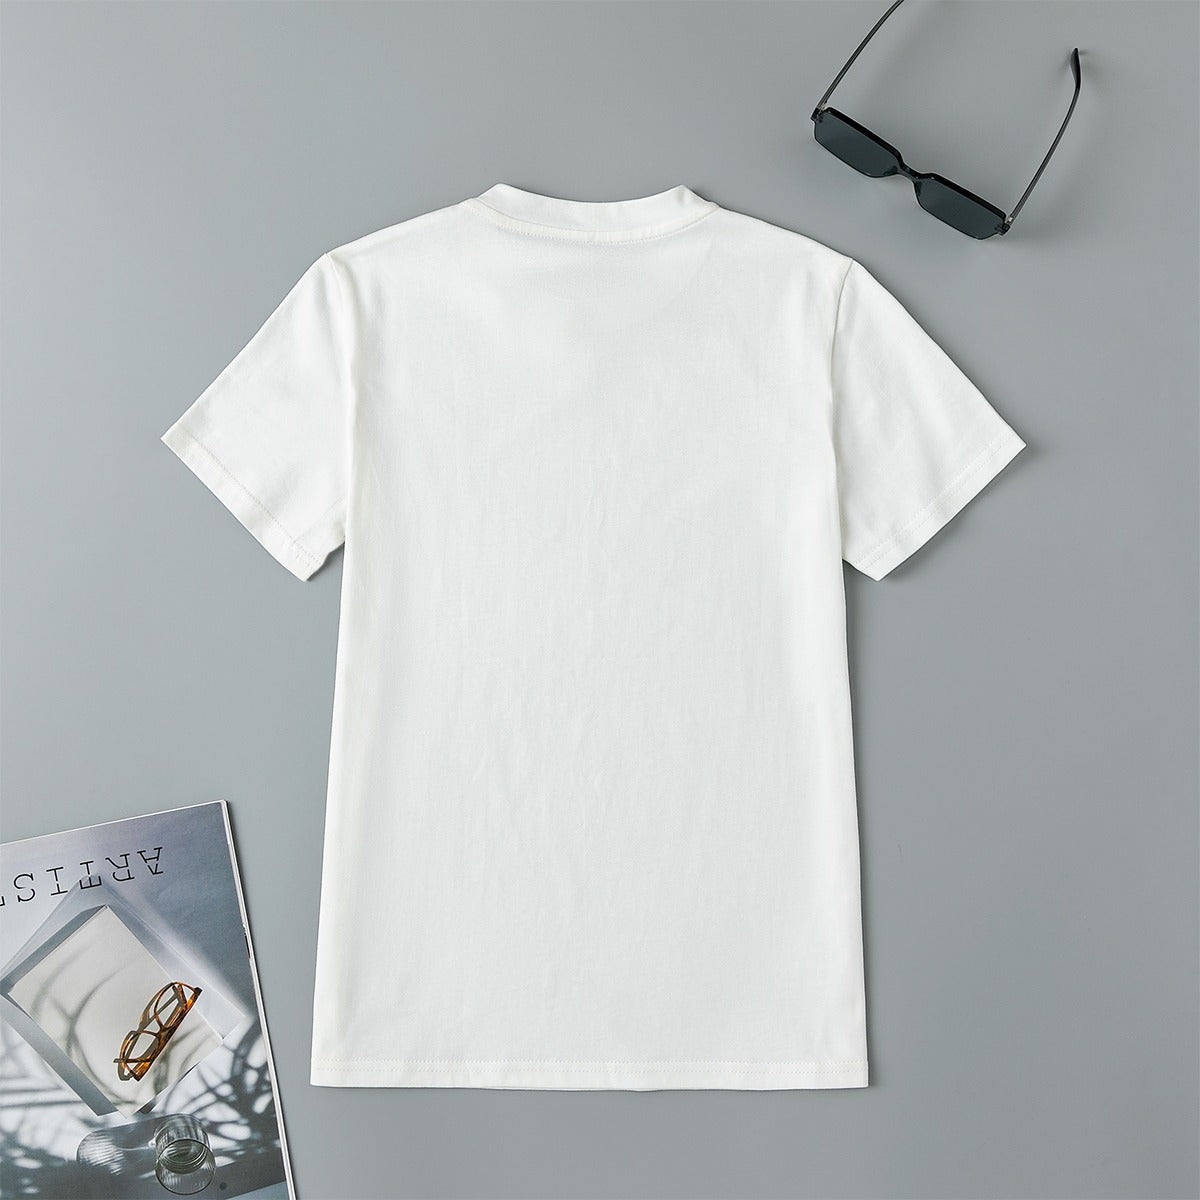 Boys T Rex Basketball shirt 100% Cotton - Clothes that Calm